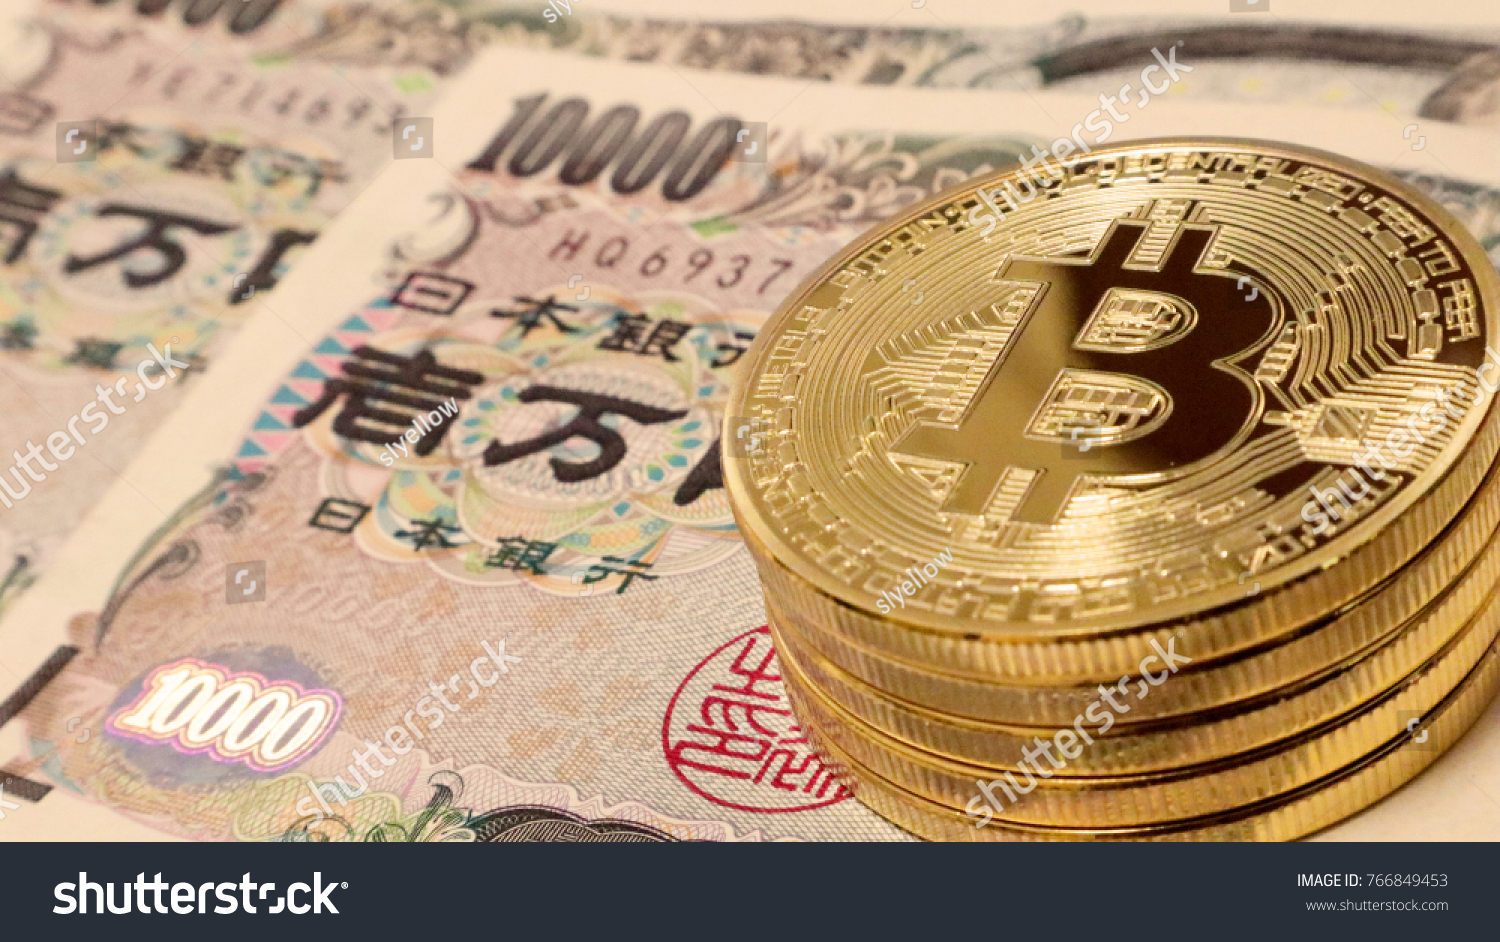 「japanese yen 與bitcoin」的圖片搜尋結果